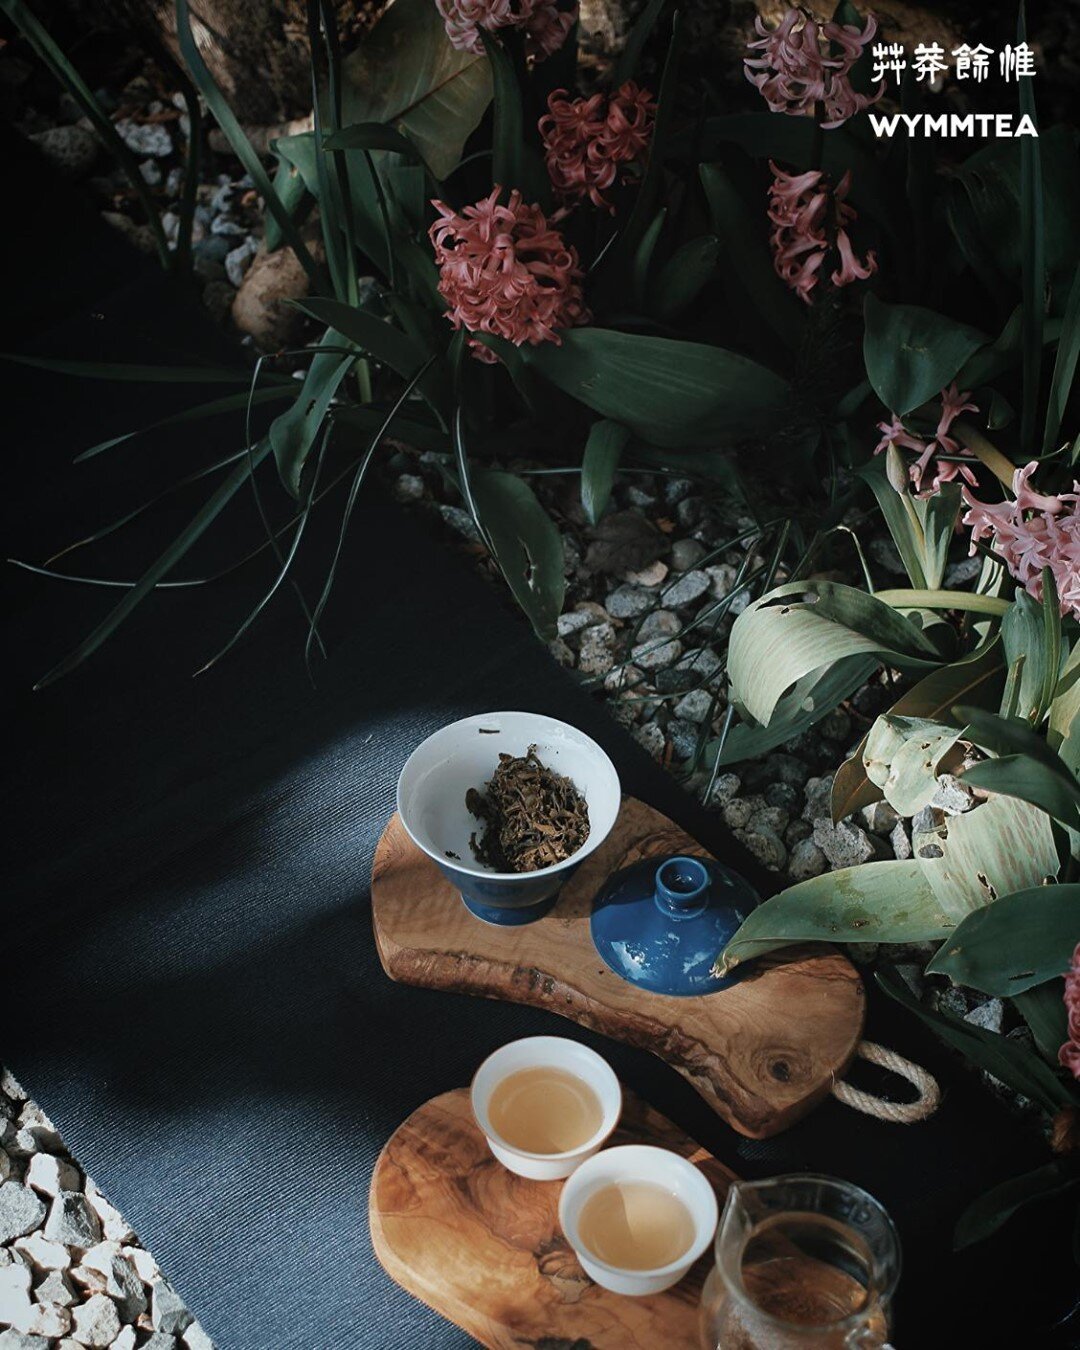 Embrace relaxation.

「坦呈&mdash;&mdash;人与茶的坦诚，人与人的坦诚。当茶席徐徐展开，人与茶的对话就开始了。」&mdash;&mdash;吴远之《大益八式：中国茶道研修方法》

#teatime #minimallife #wymmtea #puerh #puer #chinesetea